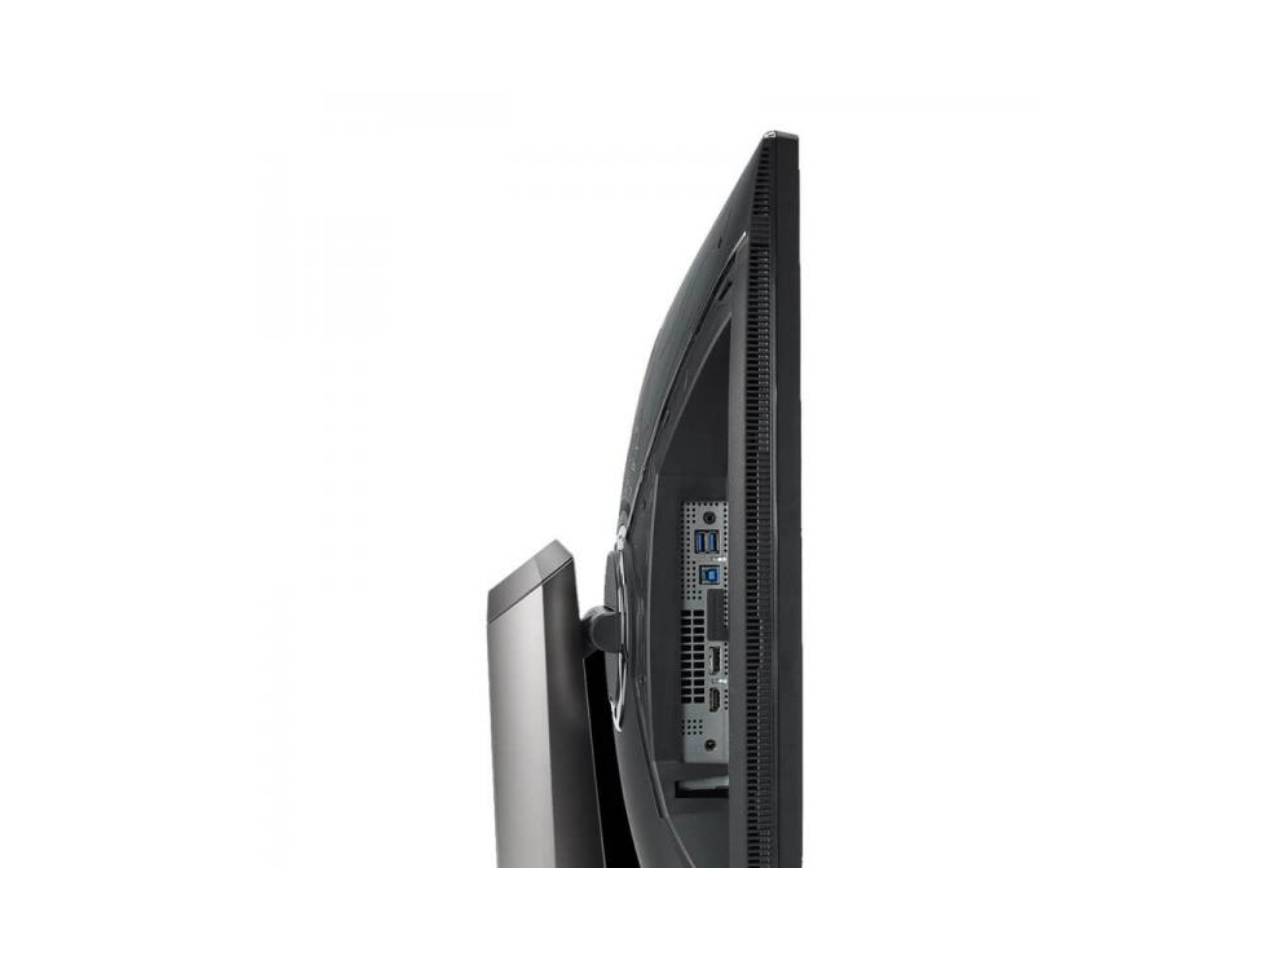 Asus ROG Swift PG27UQ 27" Gaming Monitor 4K UHD (3840x2160) 144Hz DP HDMI G-SYNC HDR Aura Sync with Eye Care